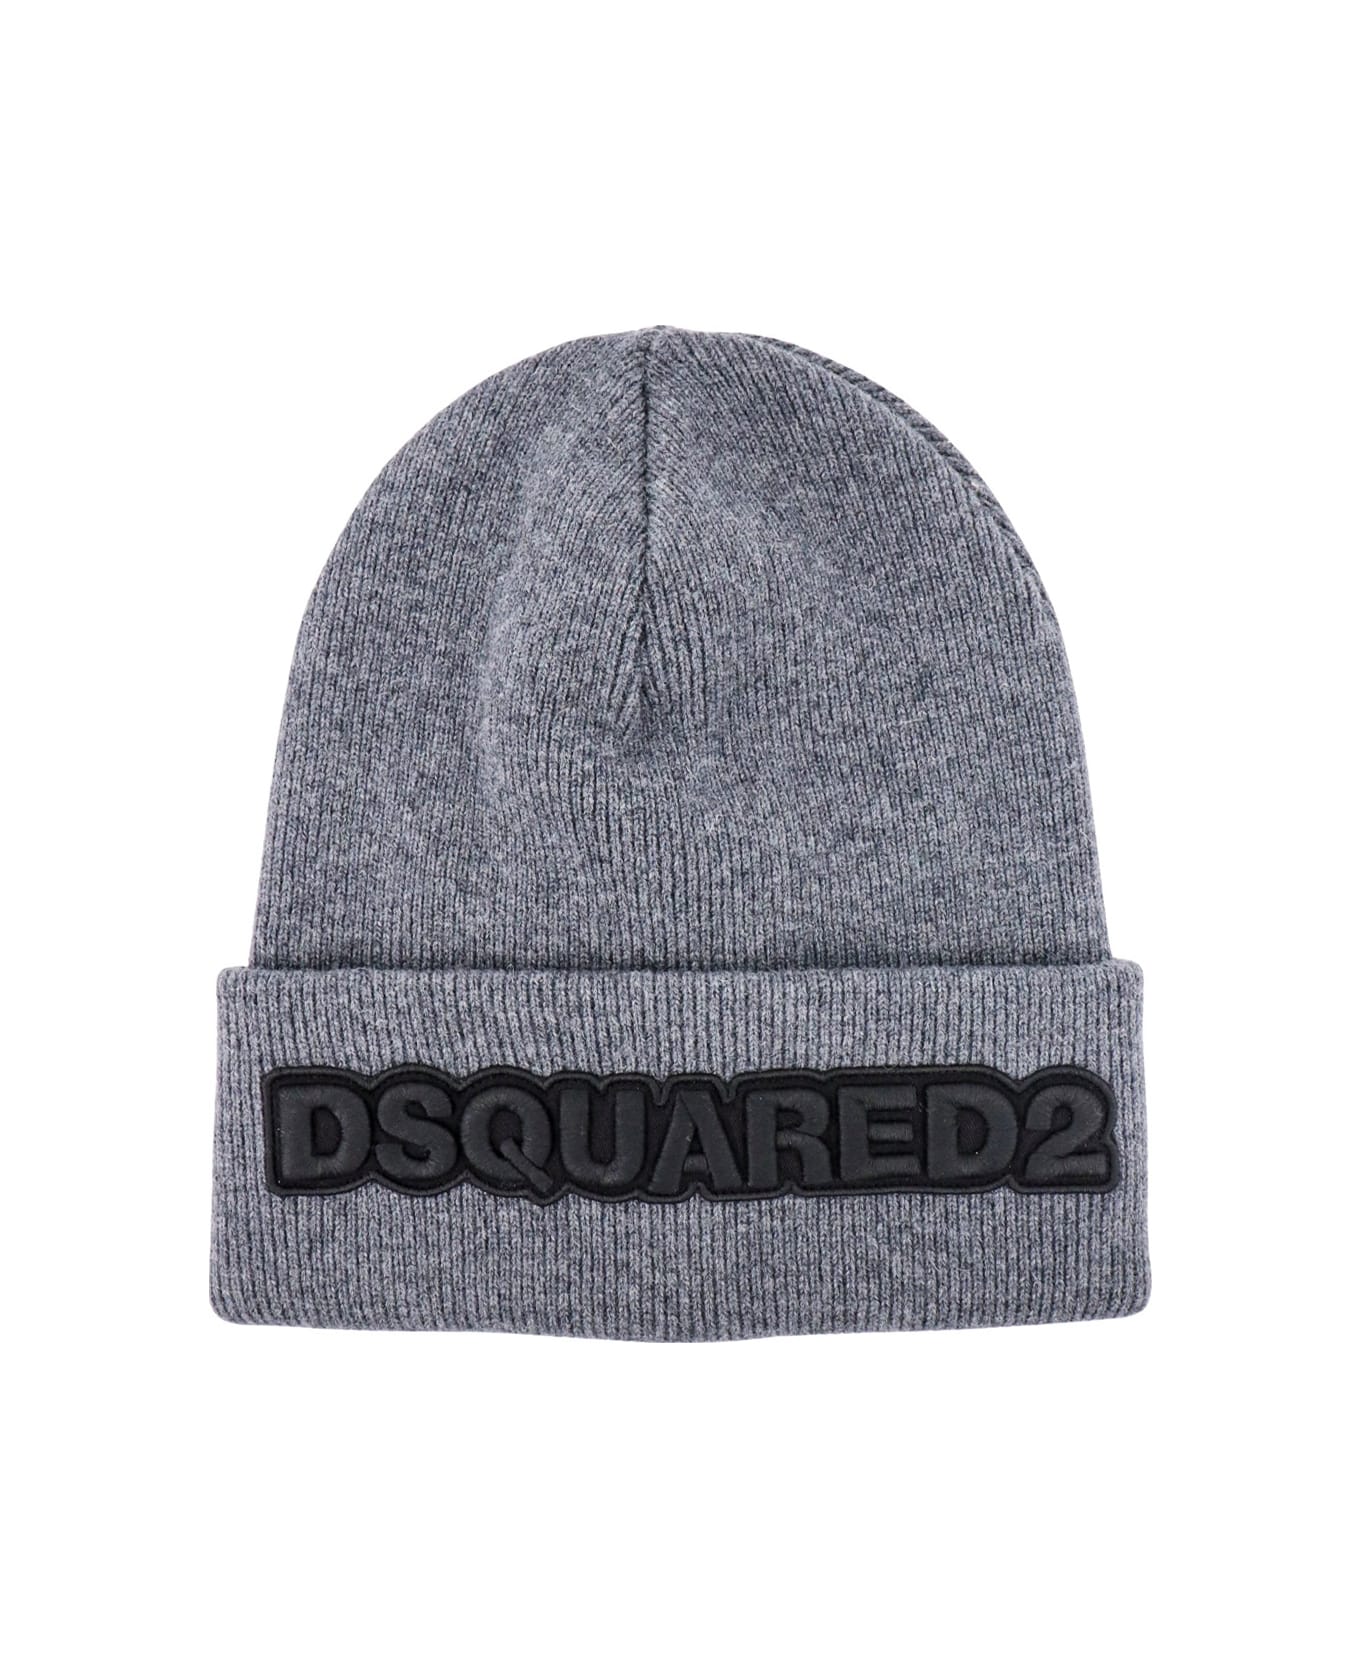 Dsquared2 Hat - Grey 帽子